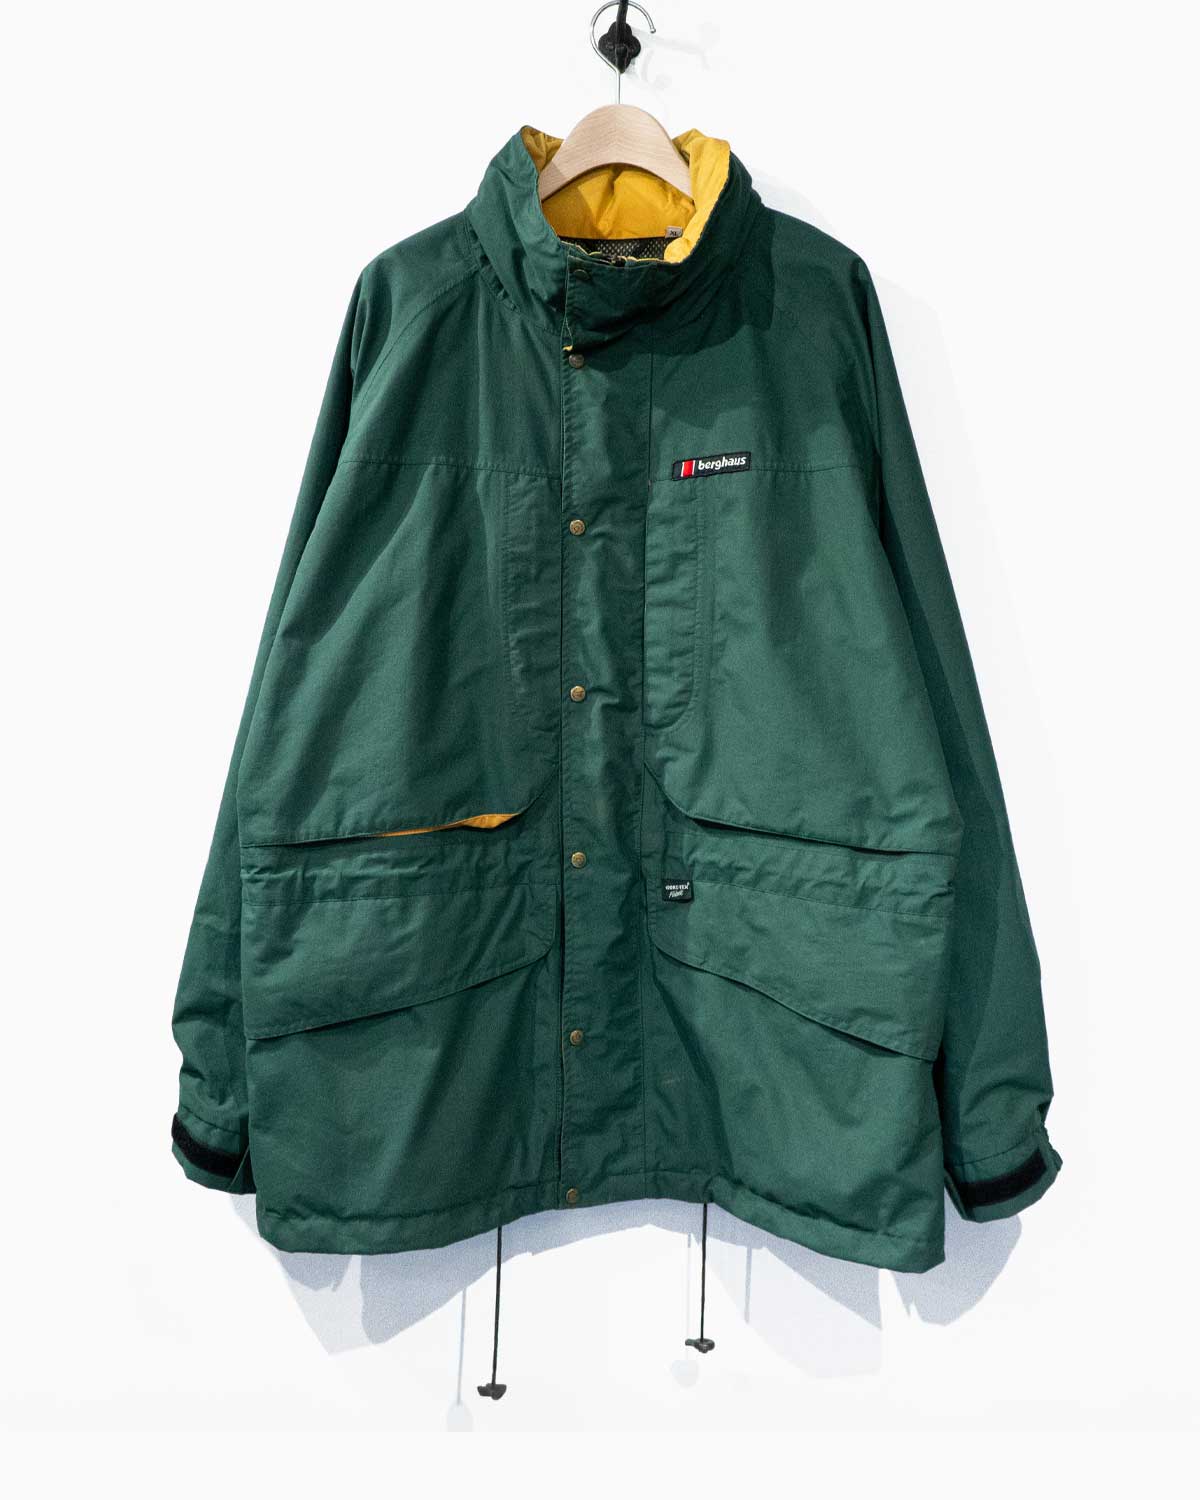 vintage 80s berghaus GORE TEX jacket -green color-